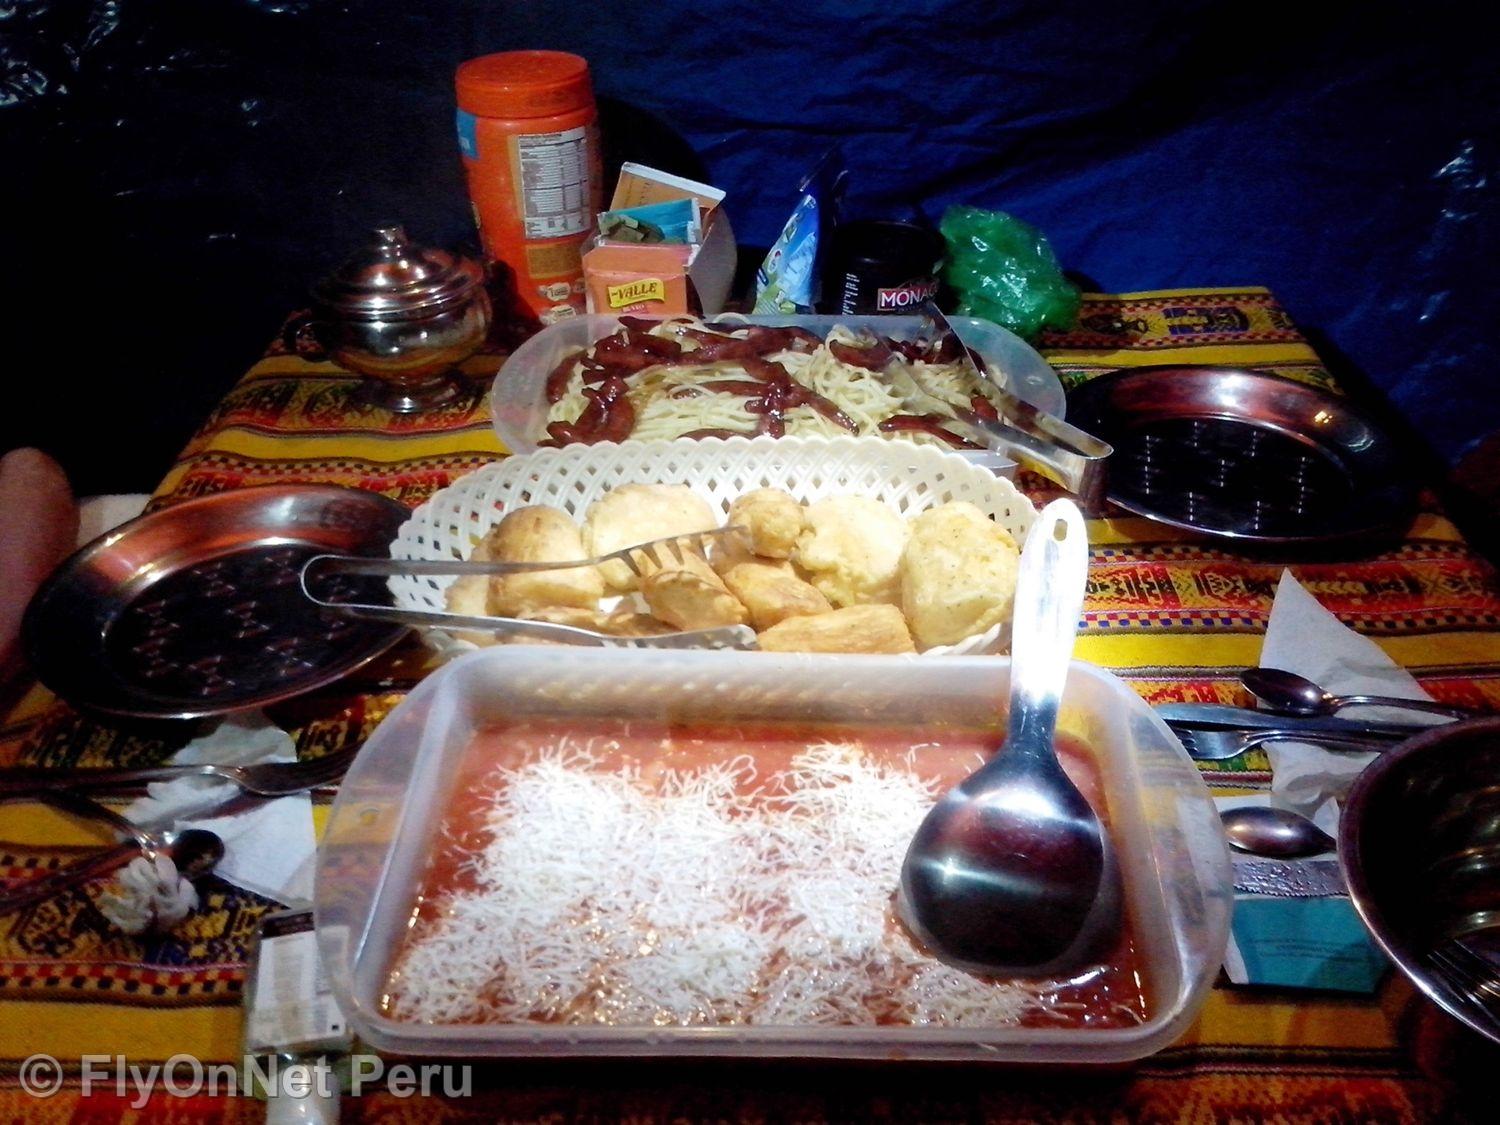 Álbum de fotos: Meal during the trek, Inca Trail